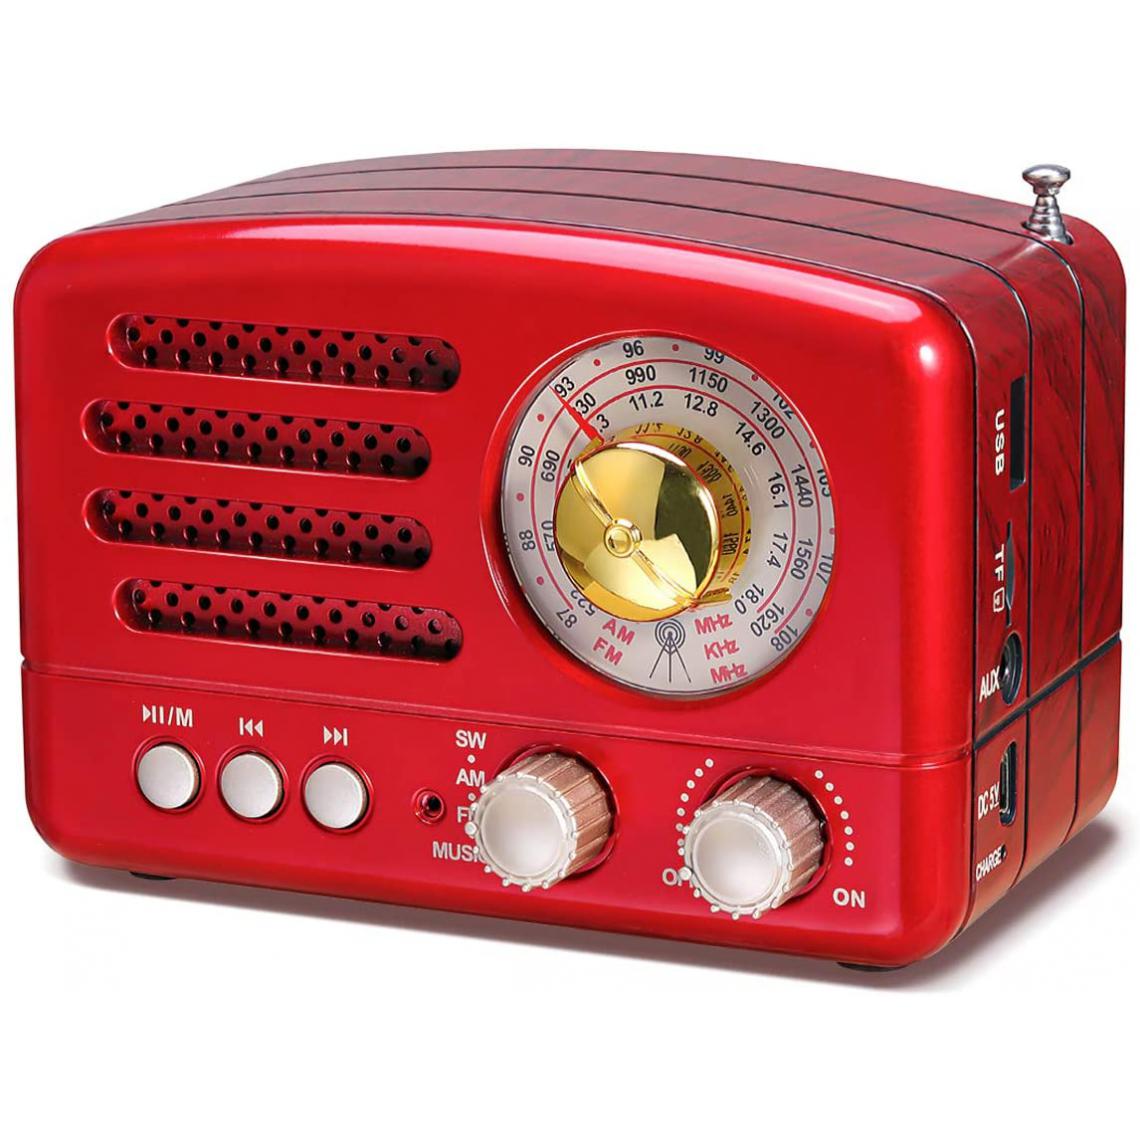 Prunus - radio portable vintage FM AM(MW) SW bluetooth avec batterie rechargeable 1800mAh rouge - Radio